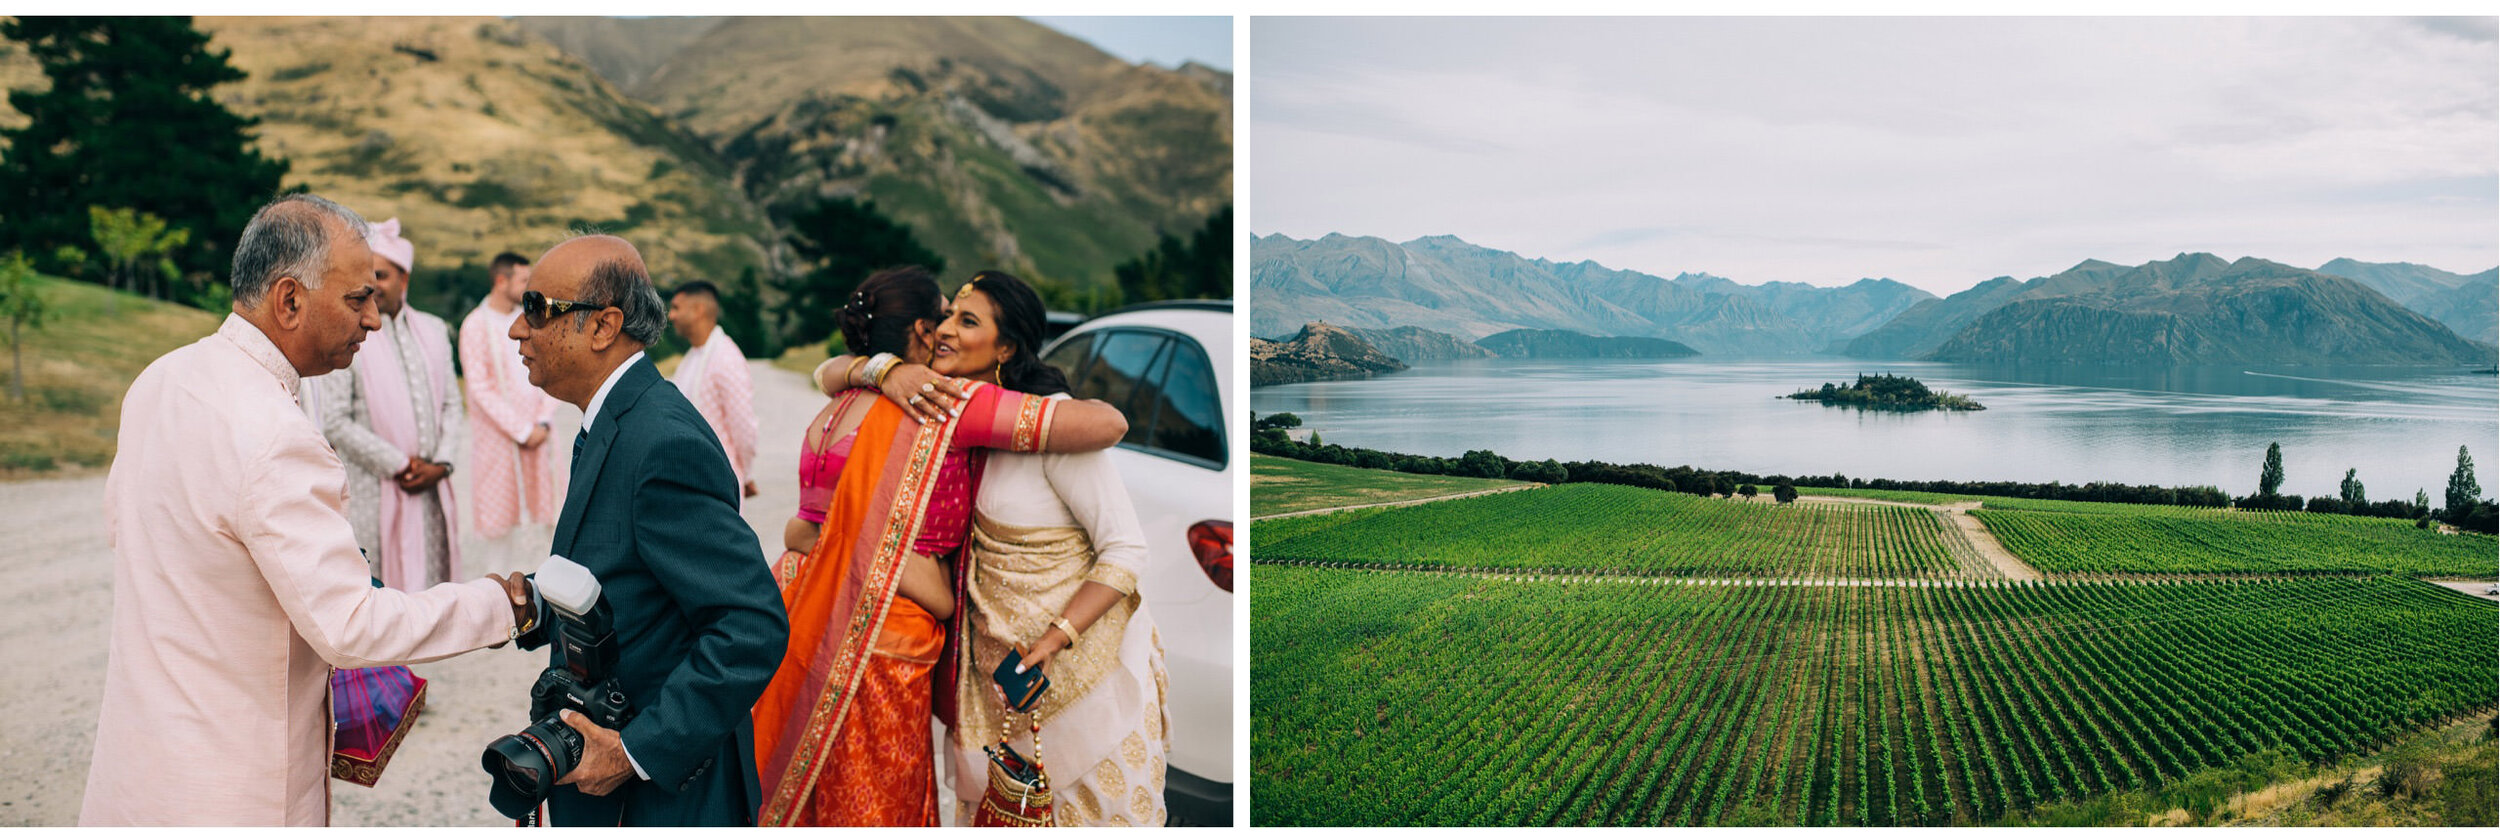 Rippon Winery Hindu Wedding Photographer-017.jpg